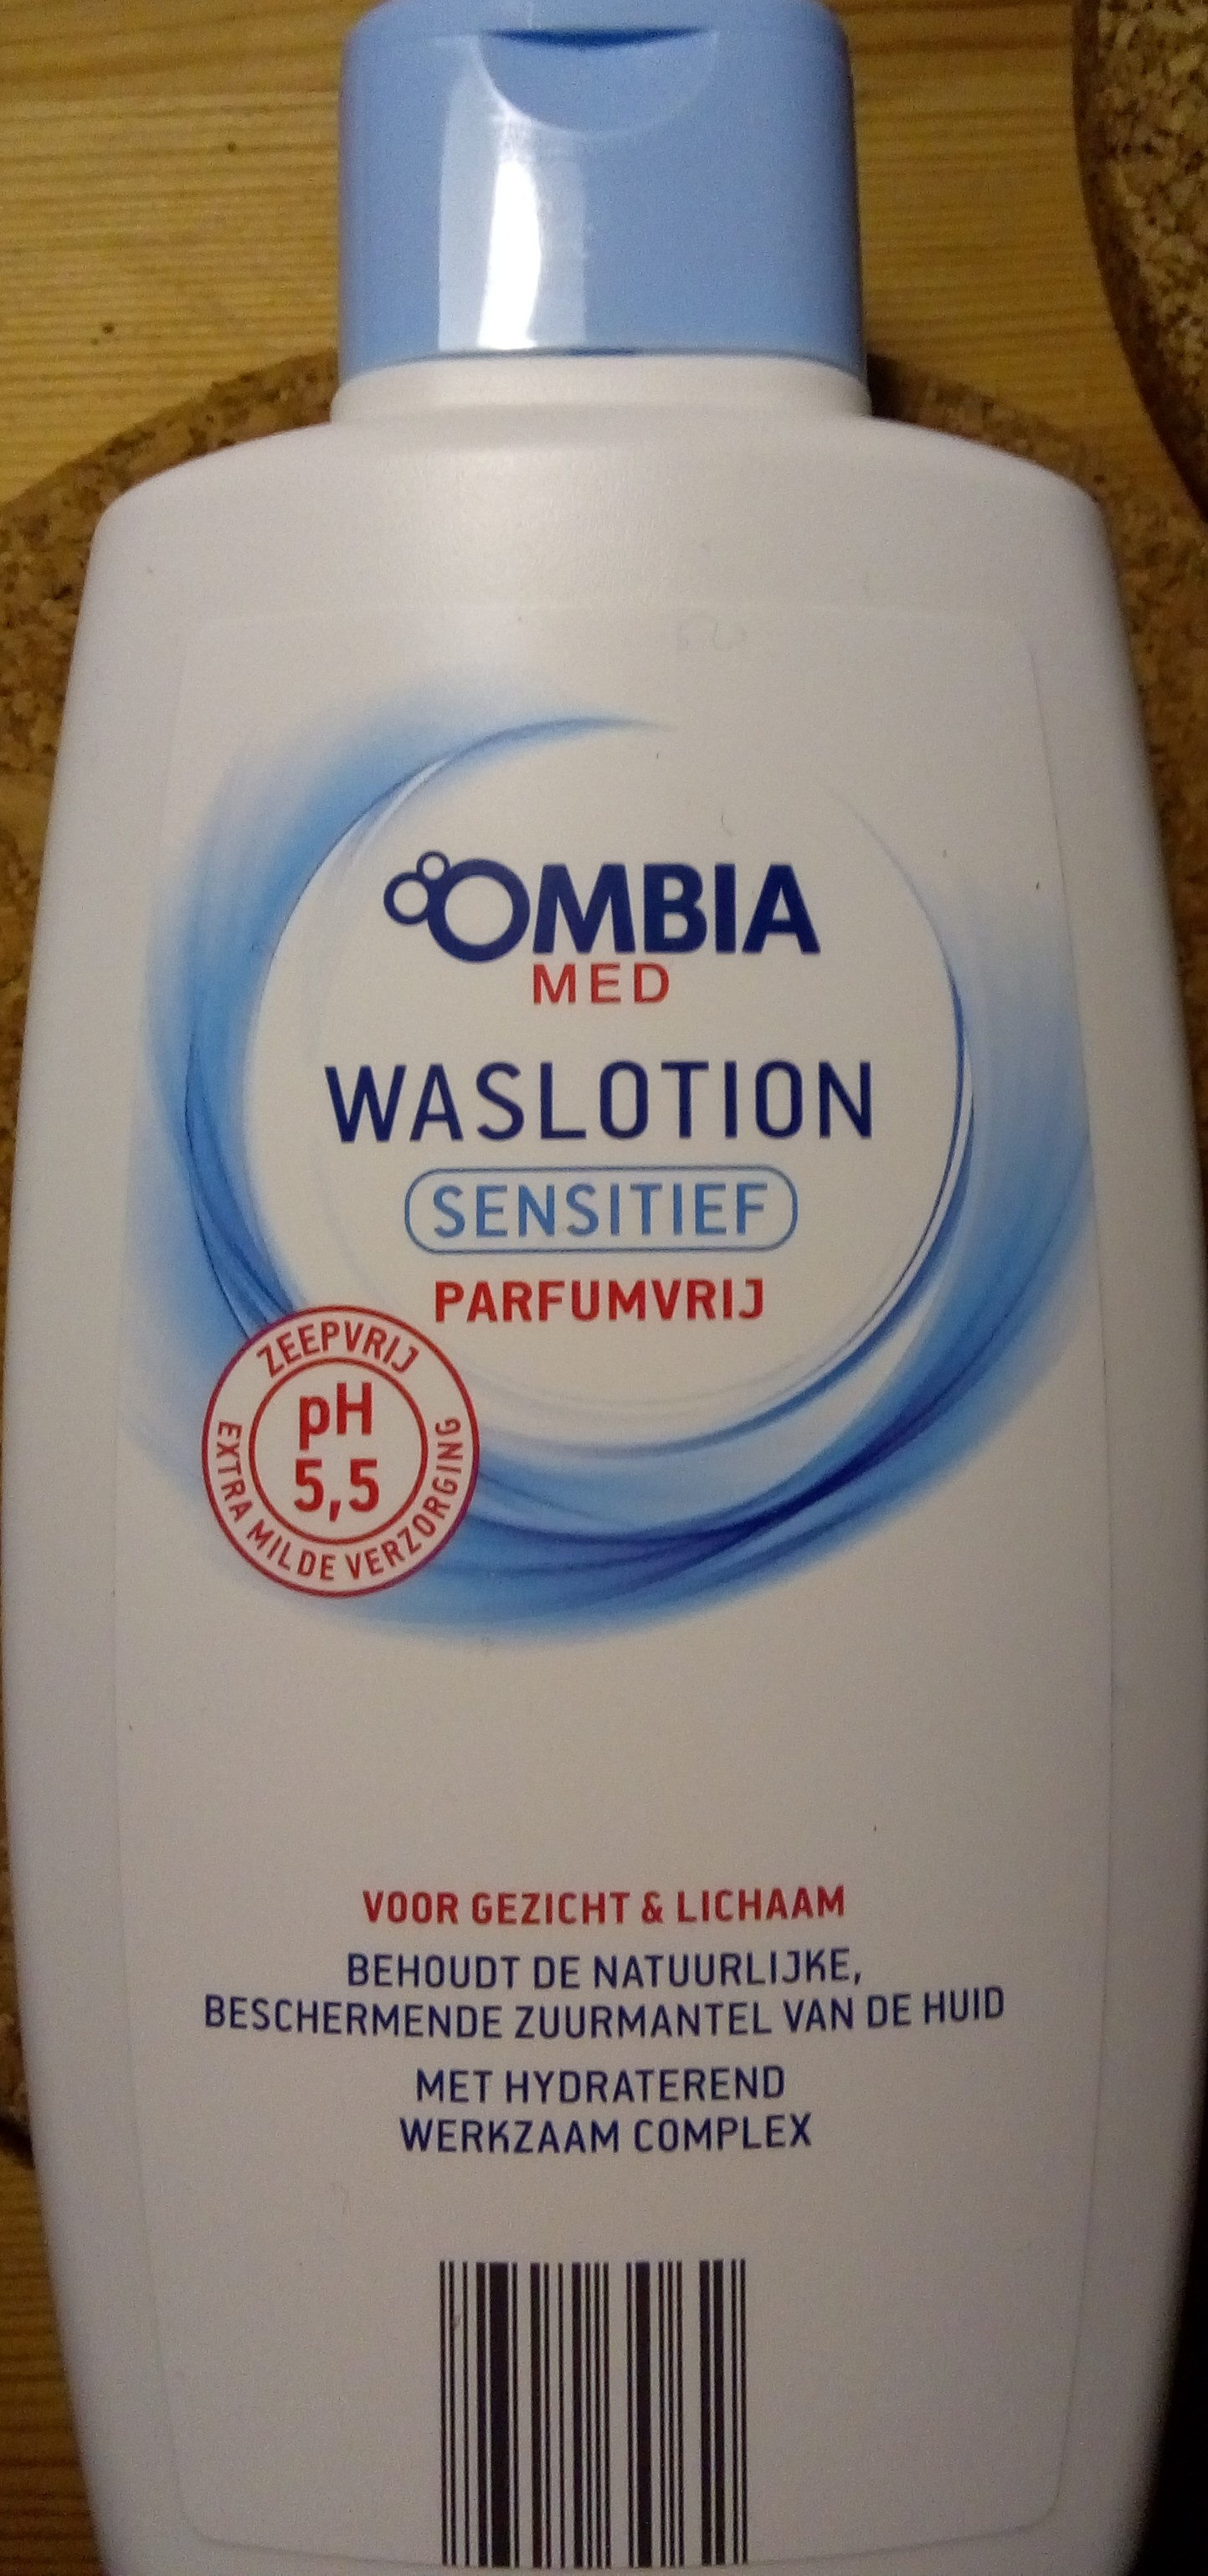 Ombia Med waslotion sensitief - 製品 - nl